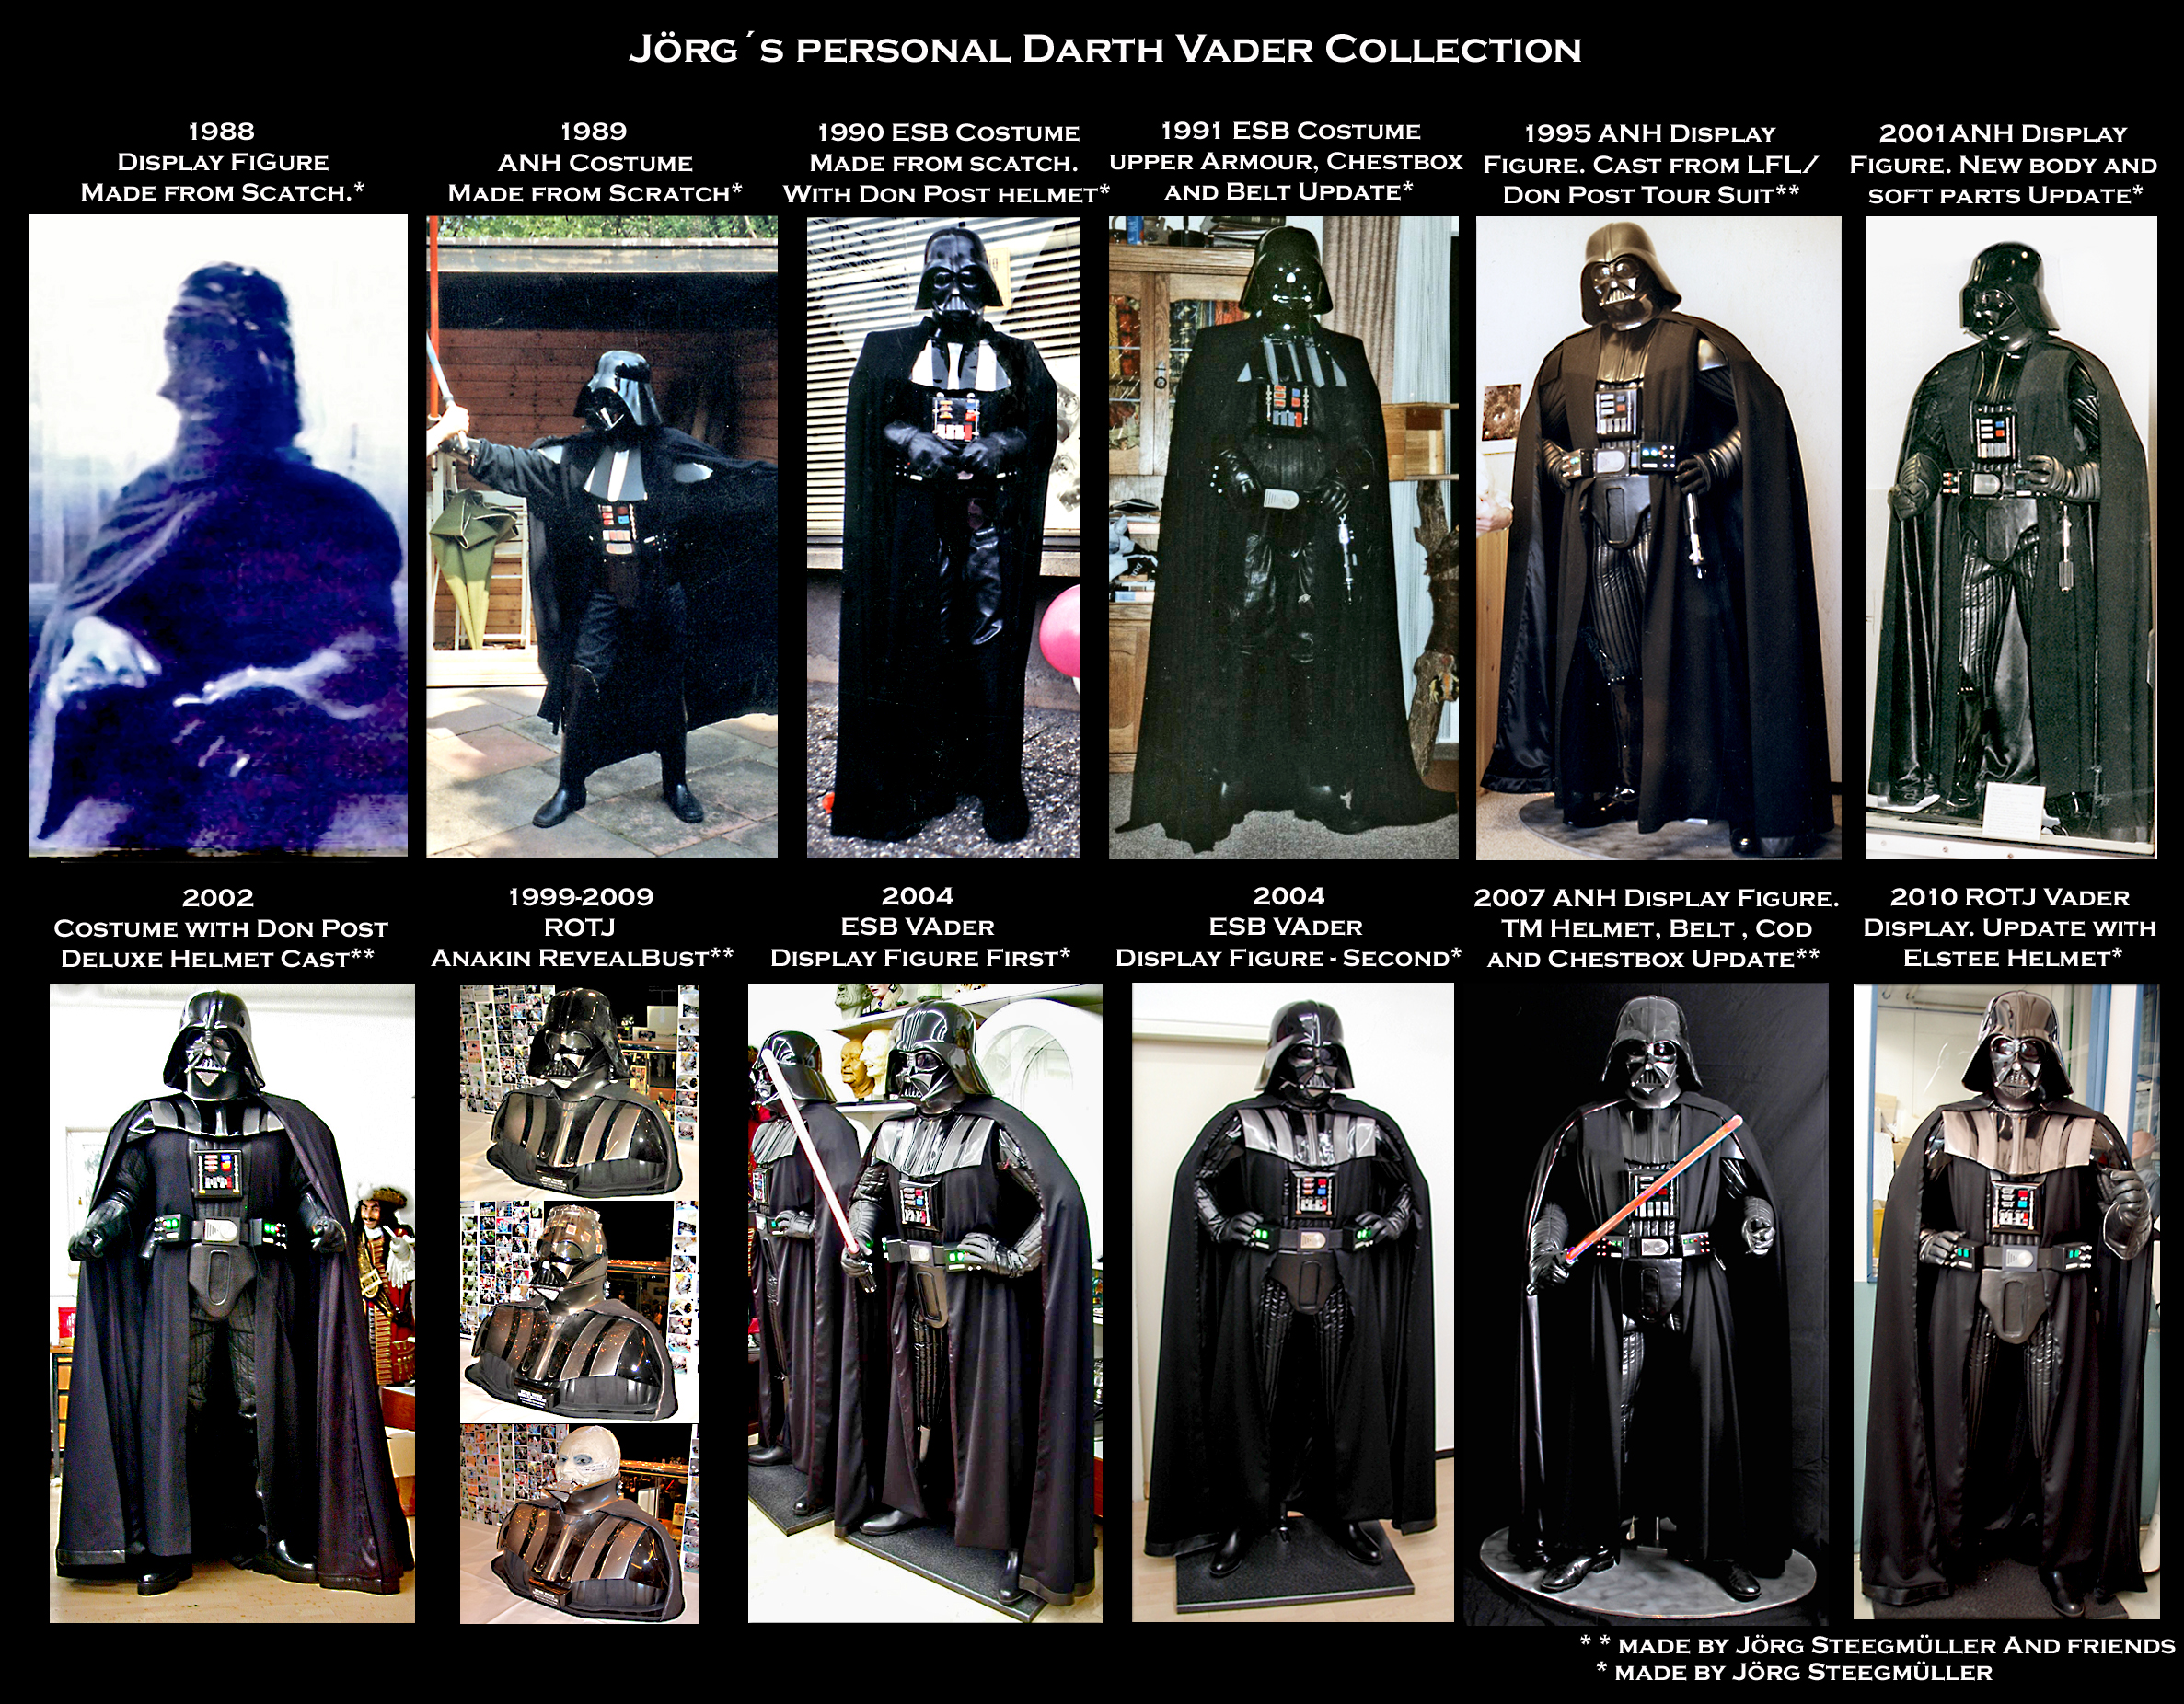 My Darth Vader timeline | RPF Costume and Prop Maker Community